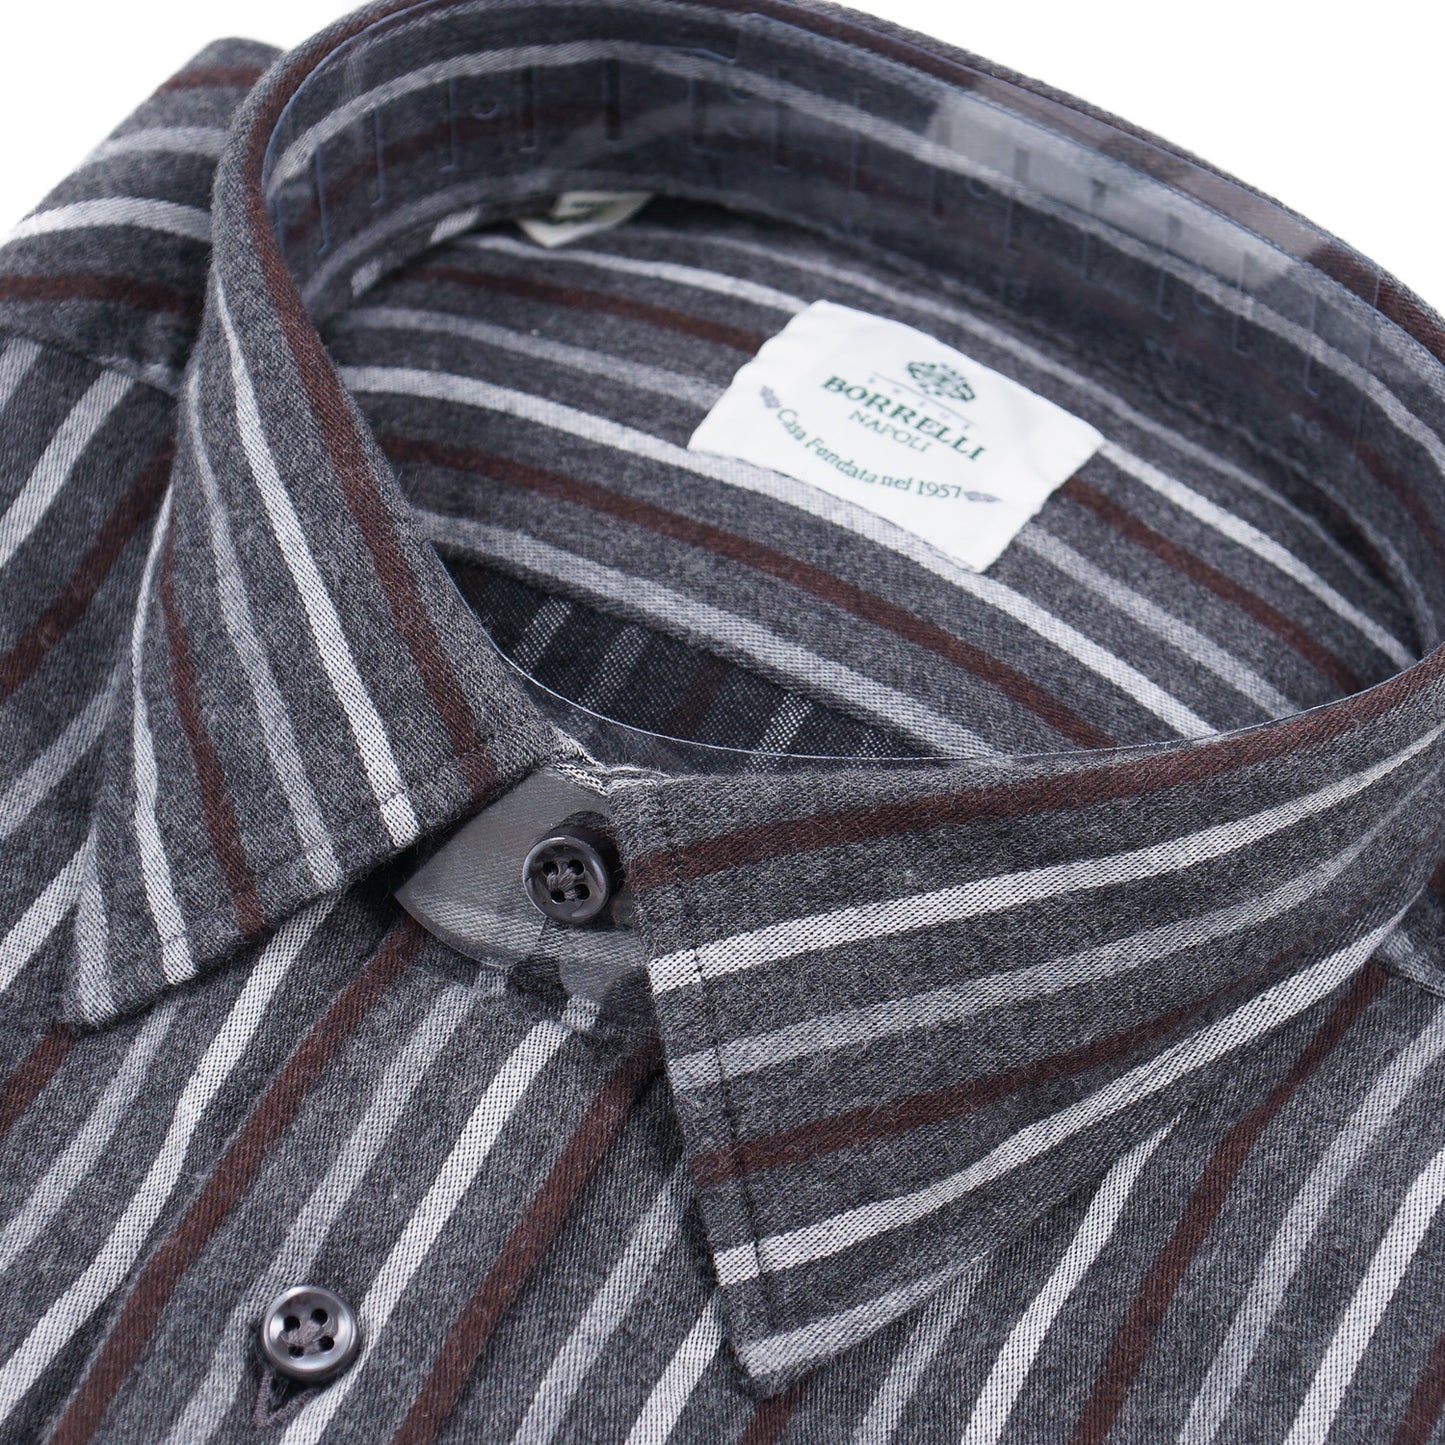 Luigi Borrelli Regular-Fit Flannel Cotton Shirt - Top Shelf Apparel